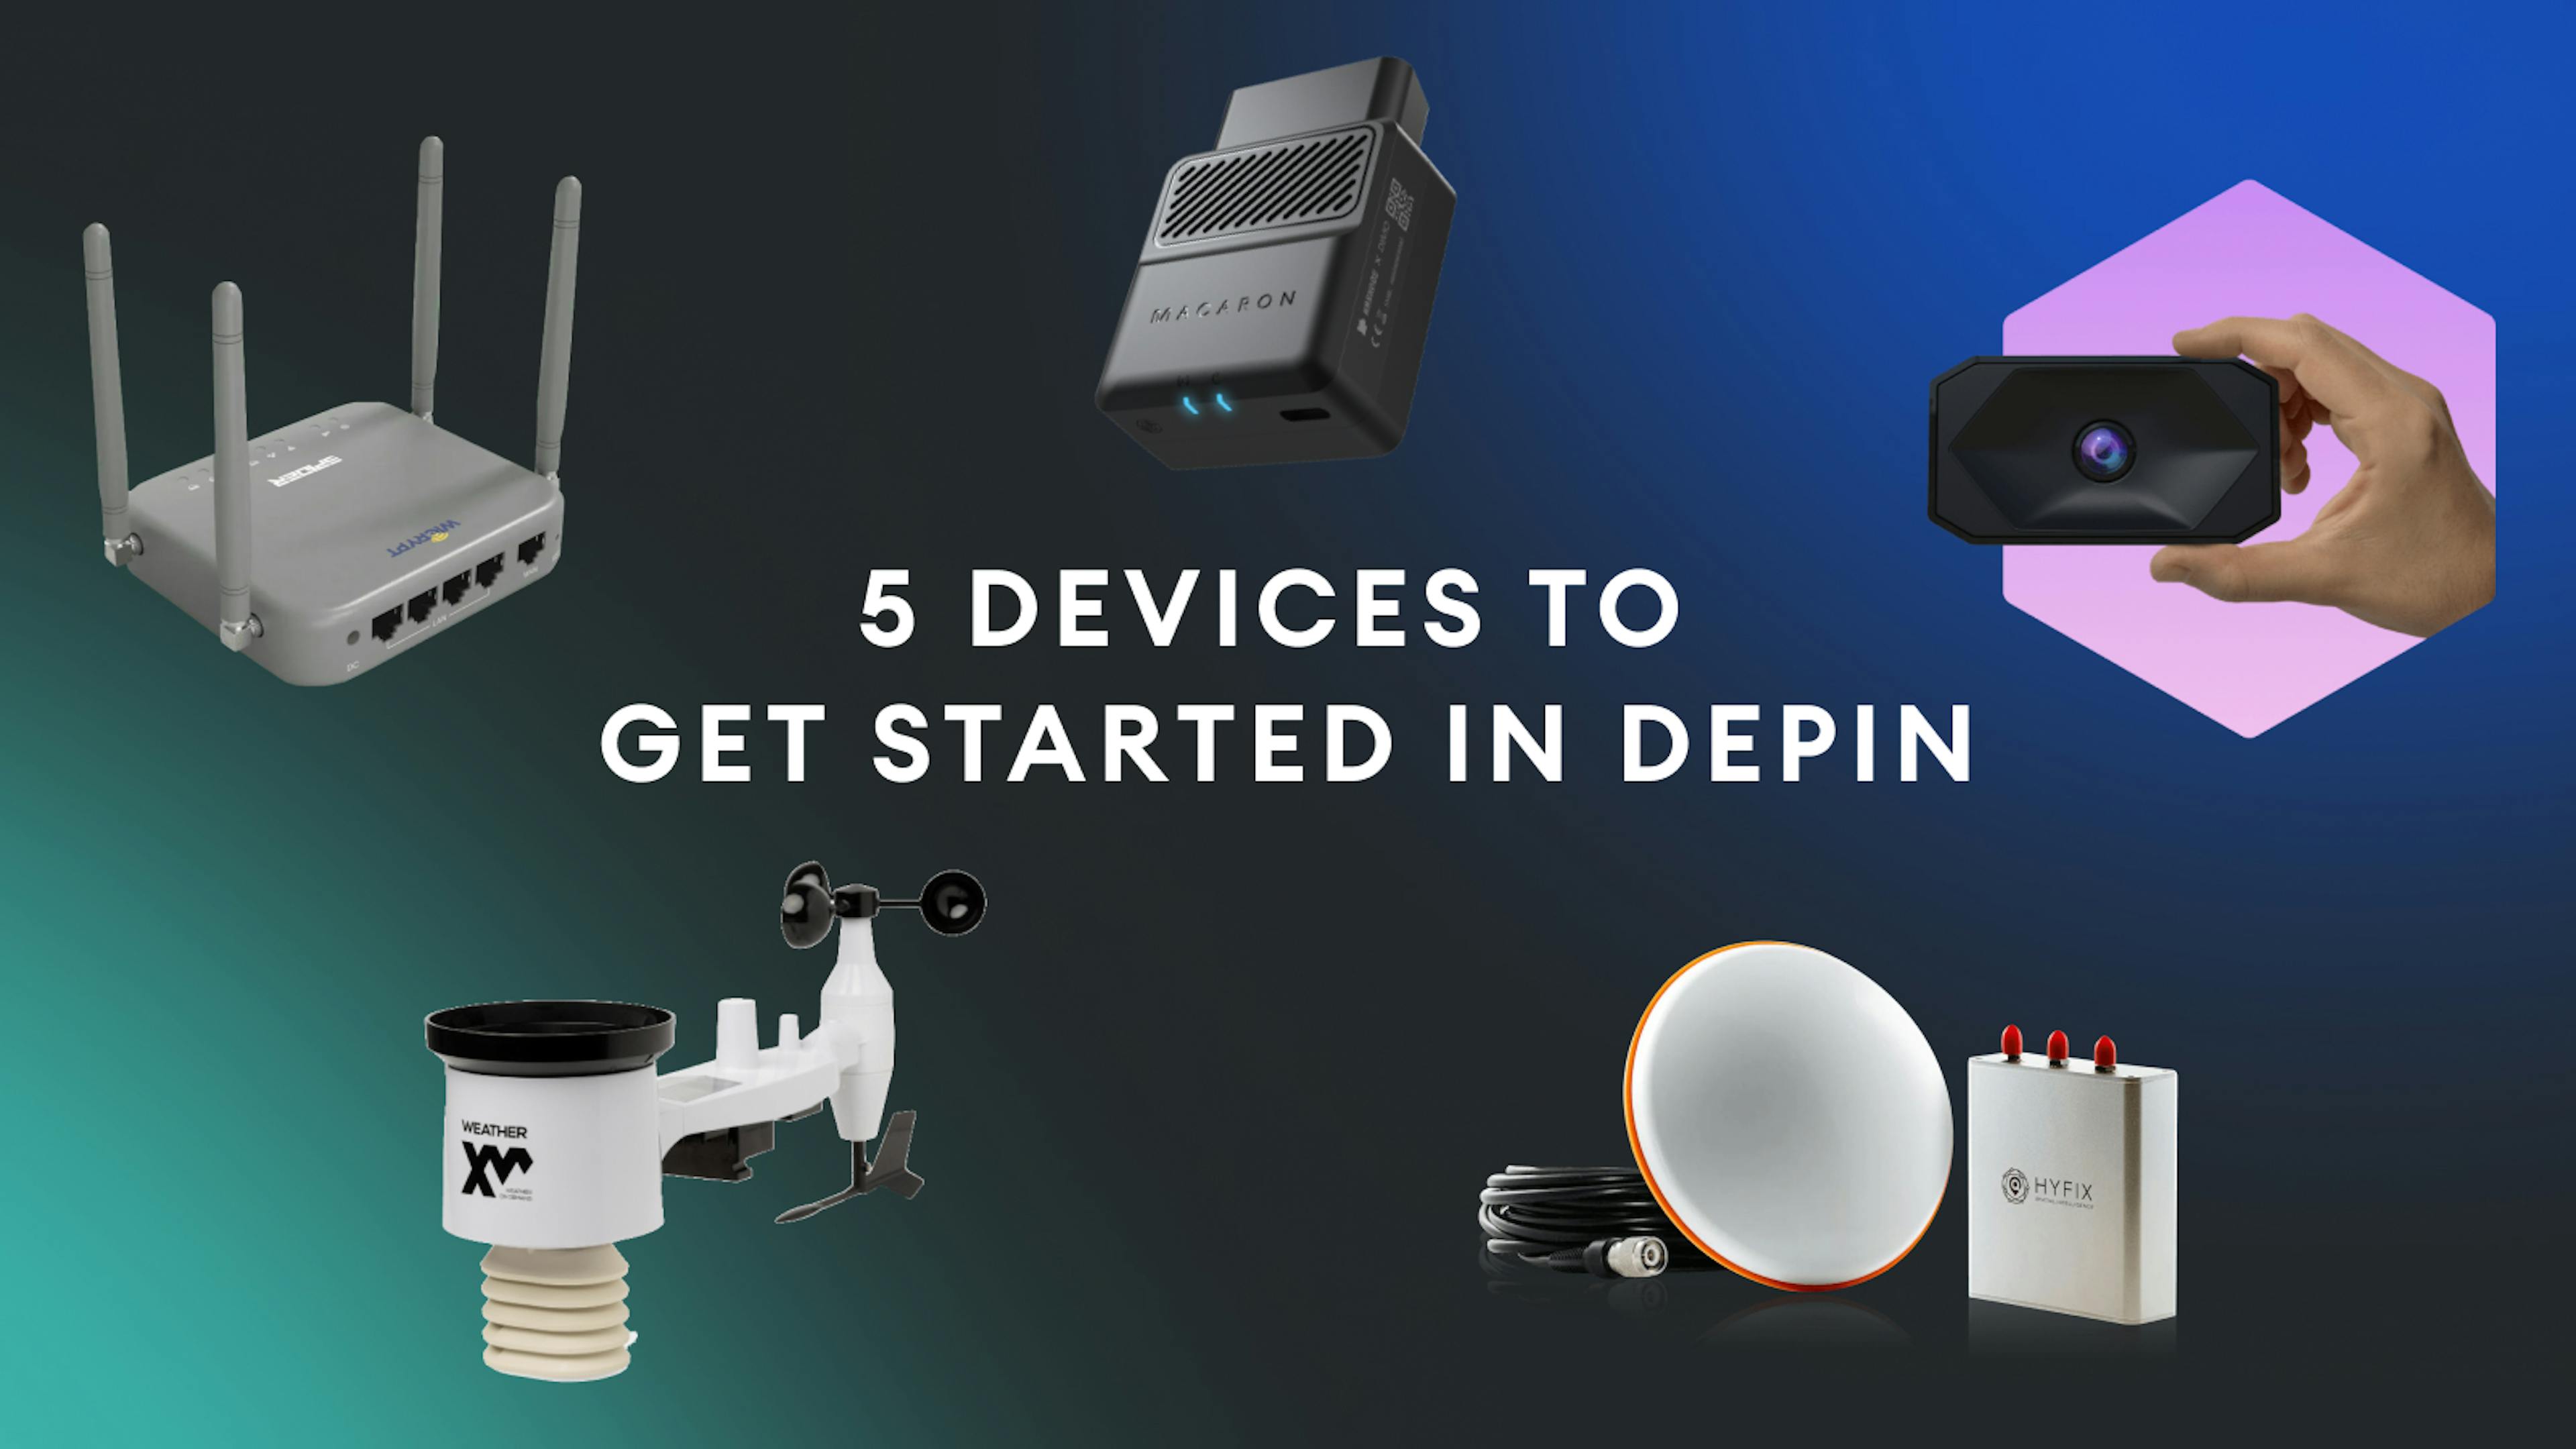 featured image - DePIN을 시작하기 위한 5가지 장치